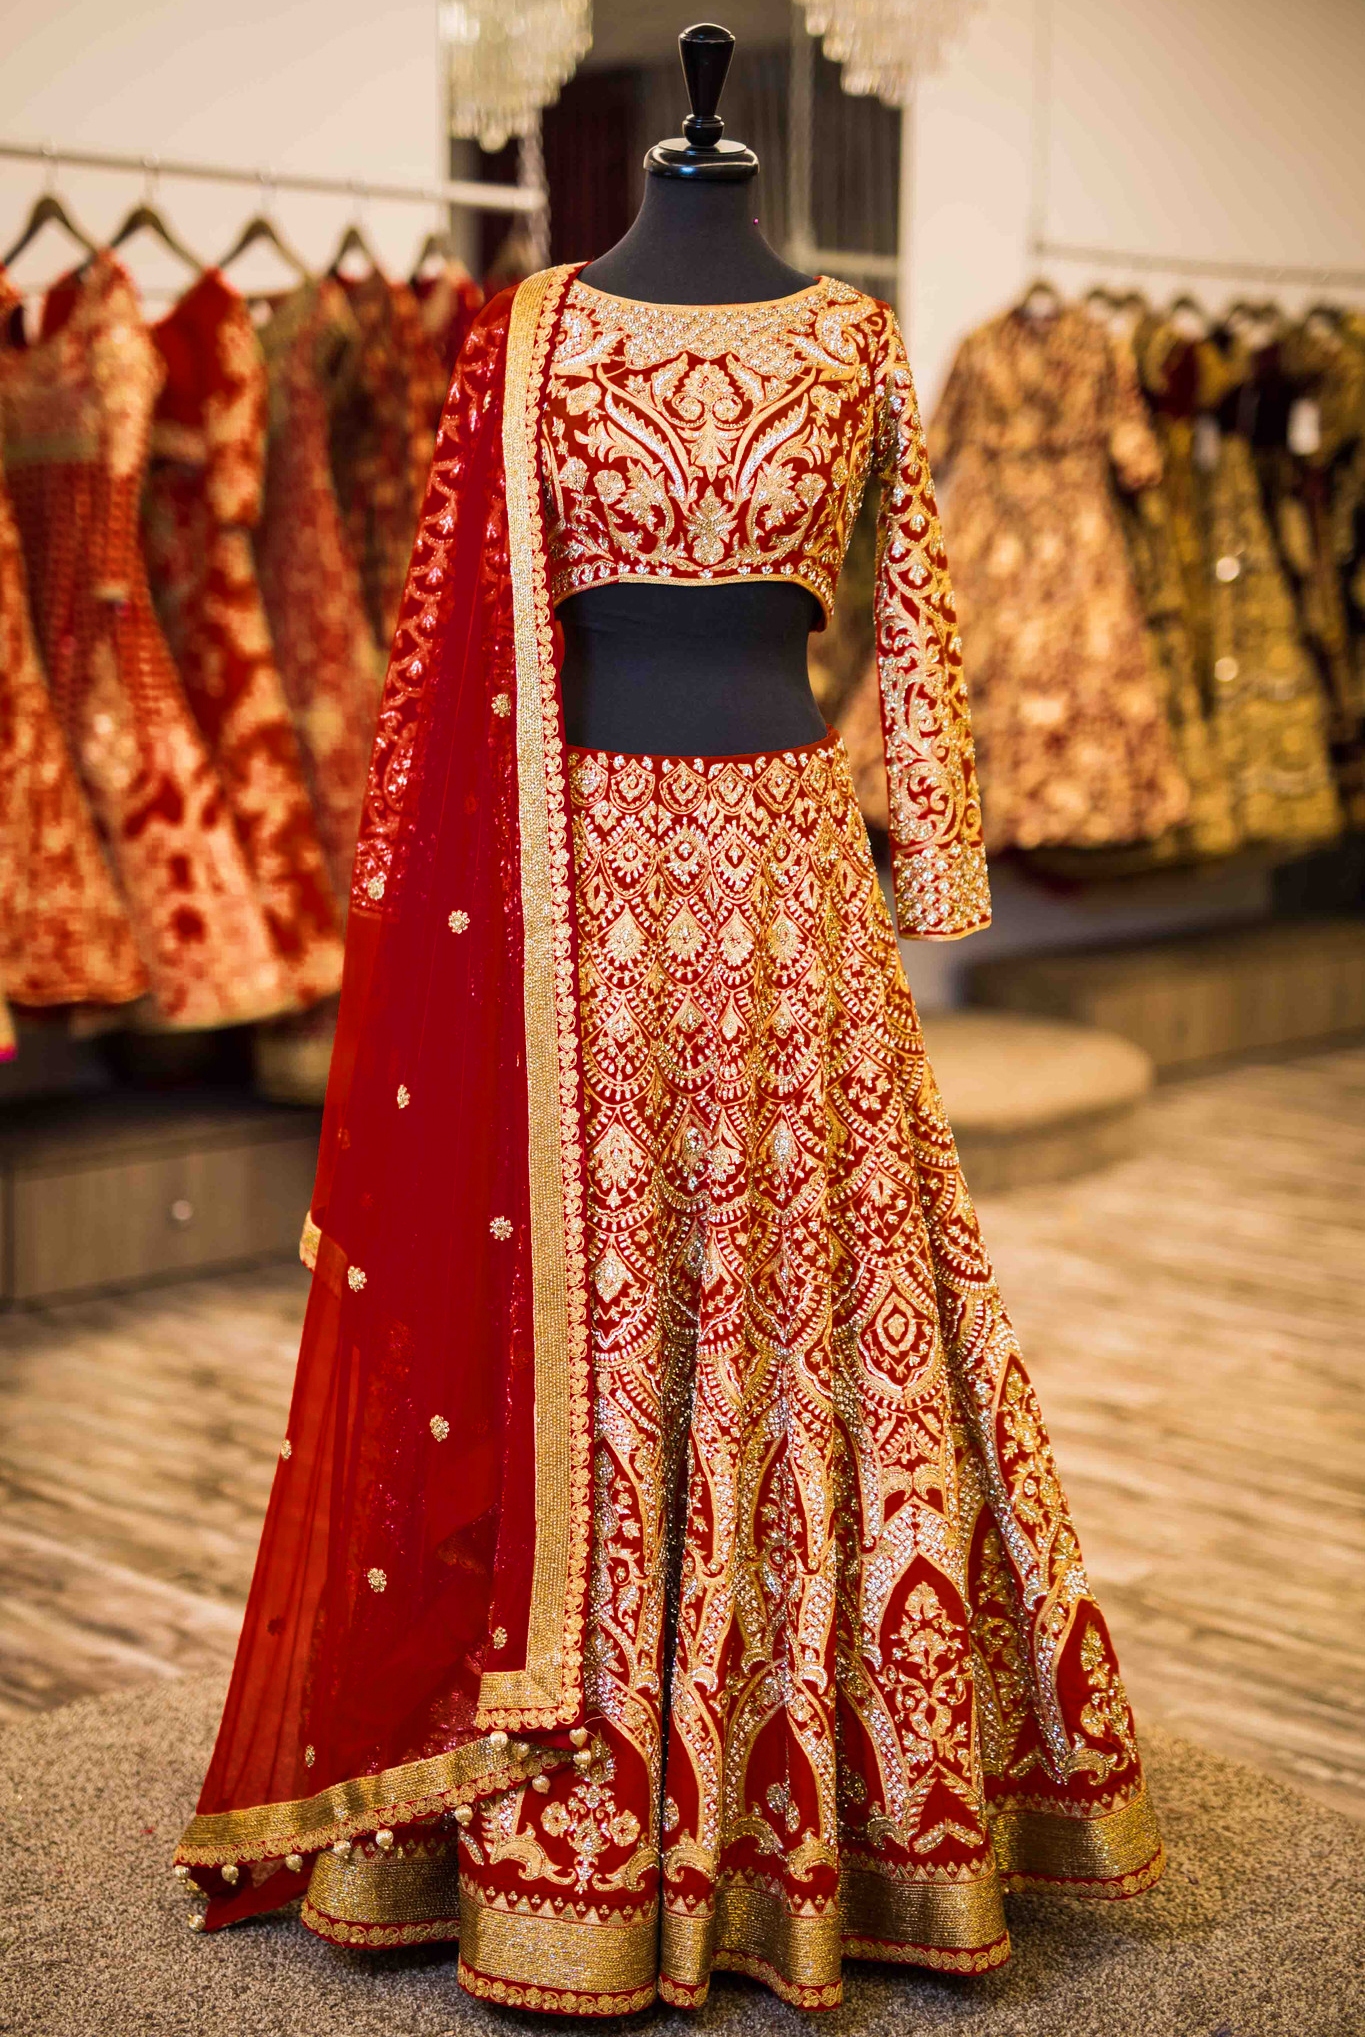 Pratham Exports Presents D No 72 Bridal Wedding Lehenga Collection Wholesale Supplier At Surat